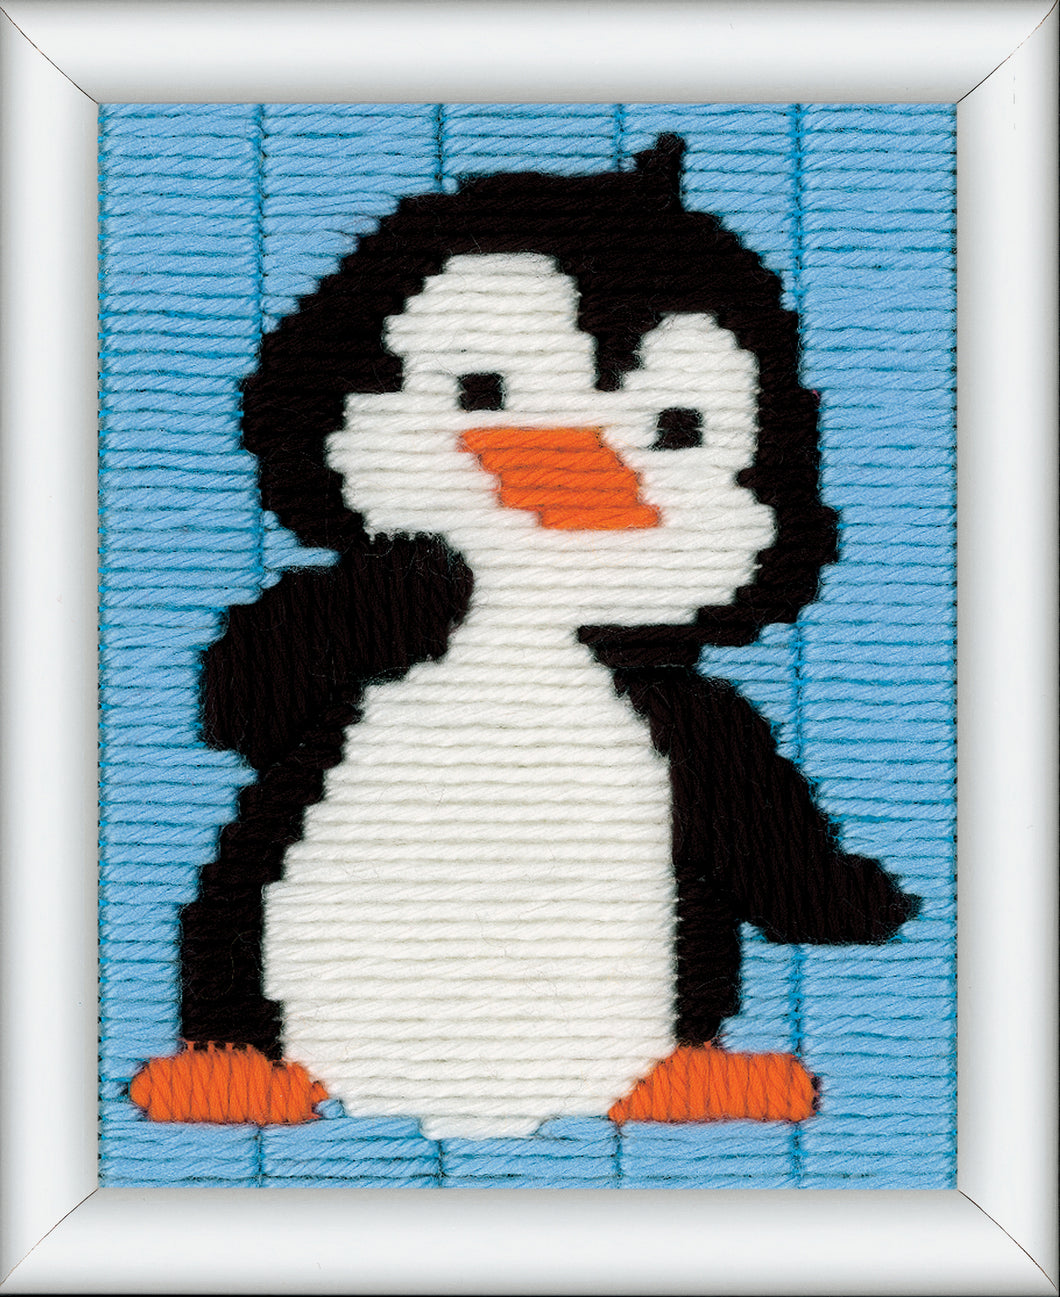 Long Stitch Kit ~ Penguin